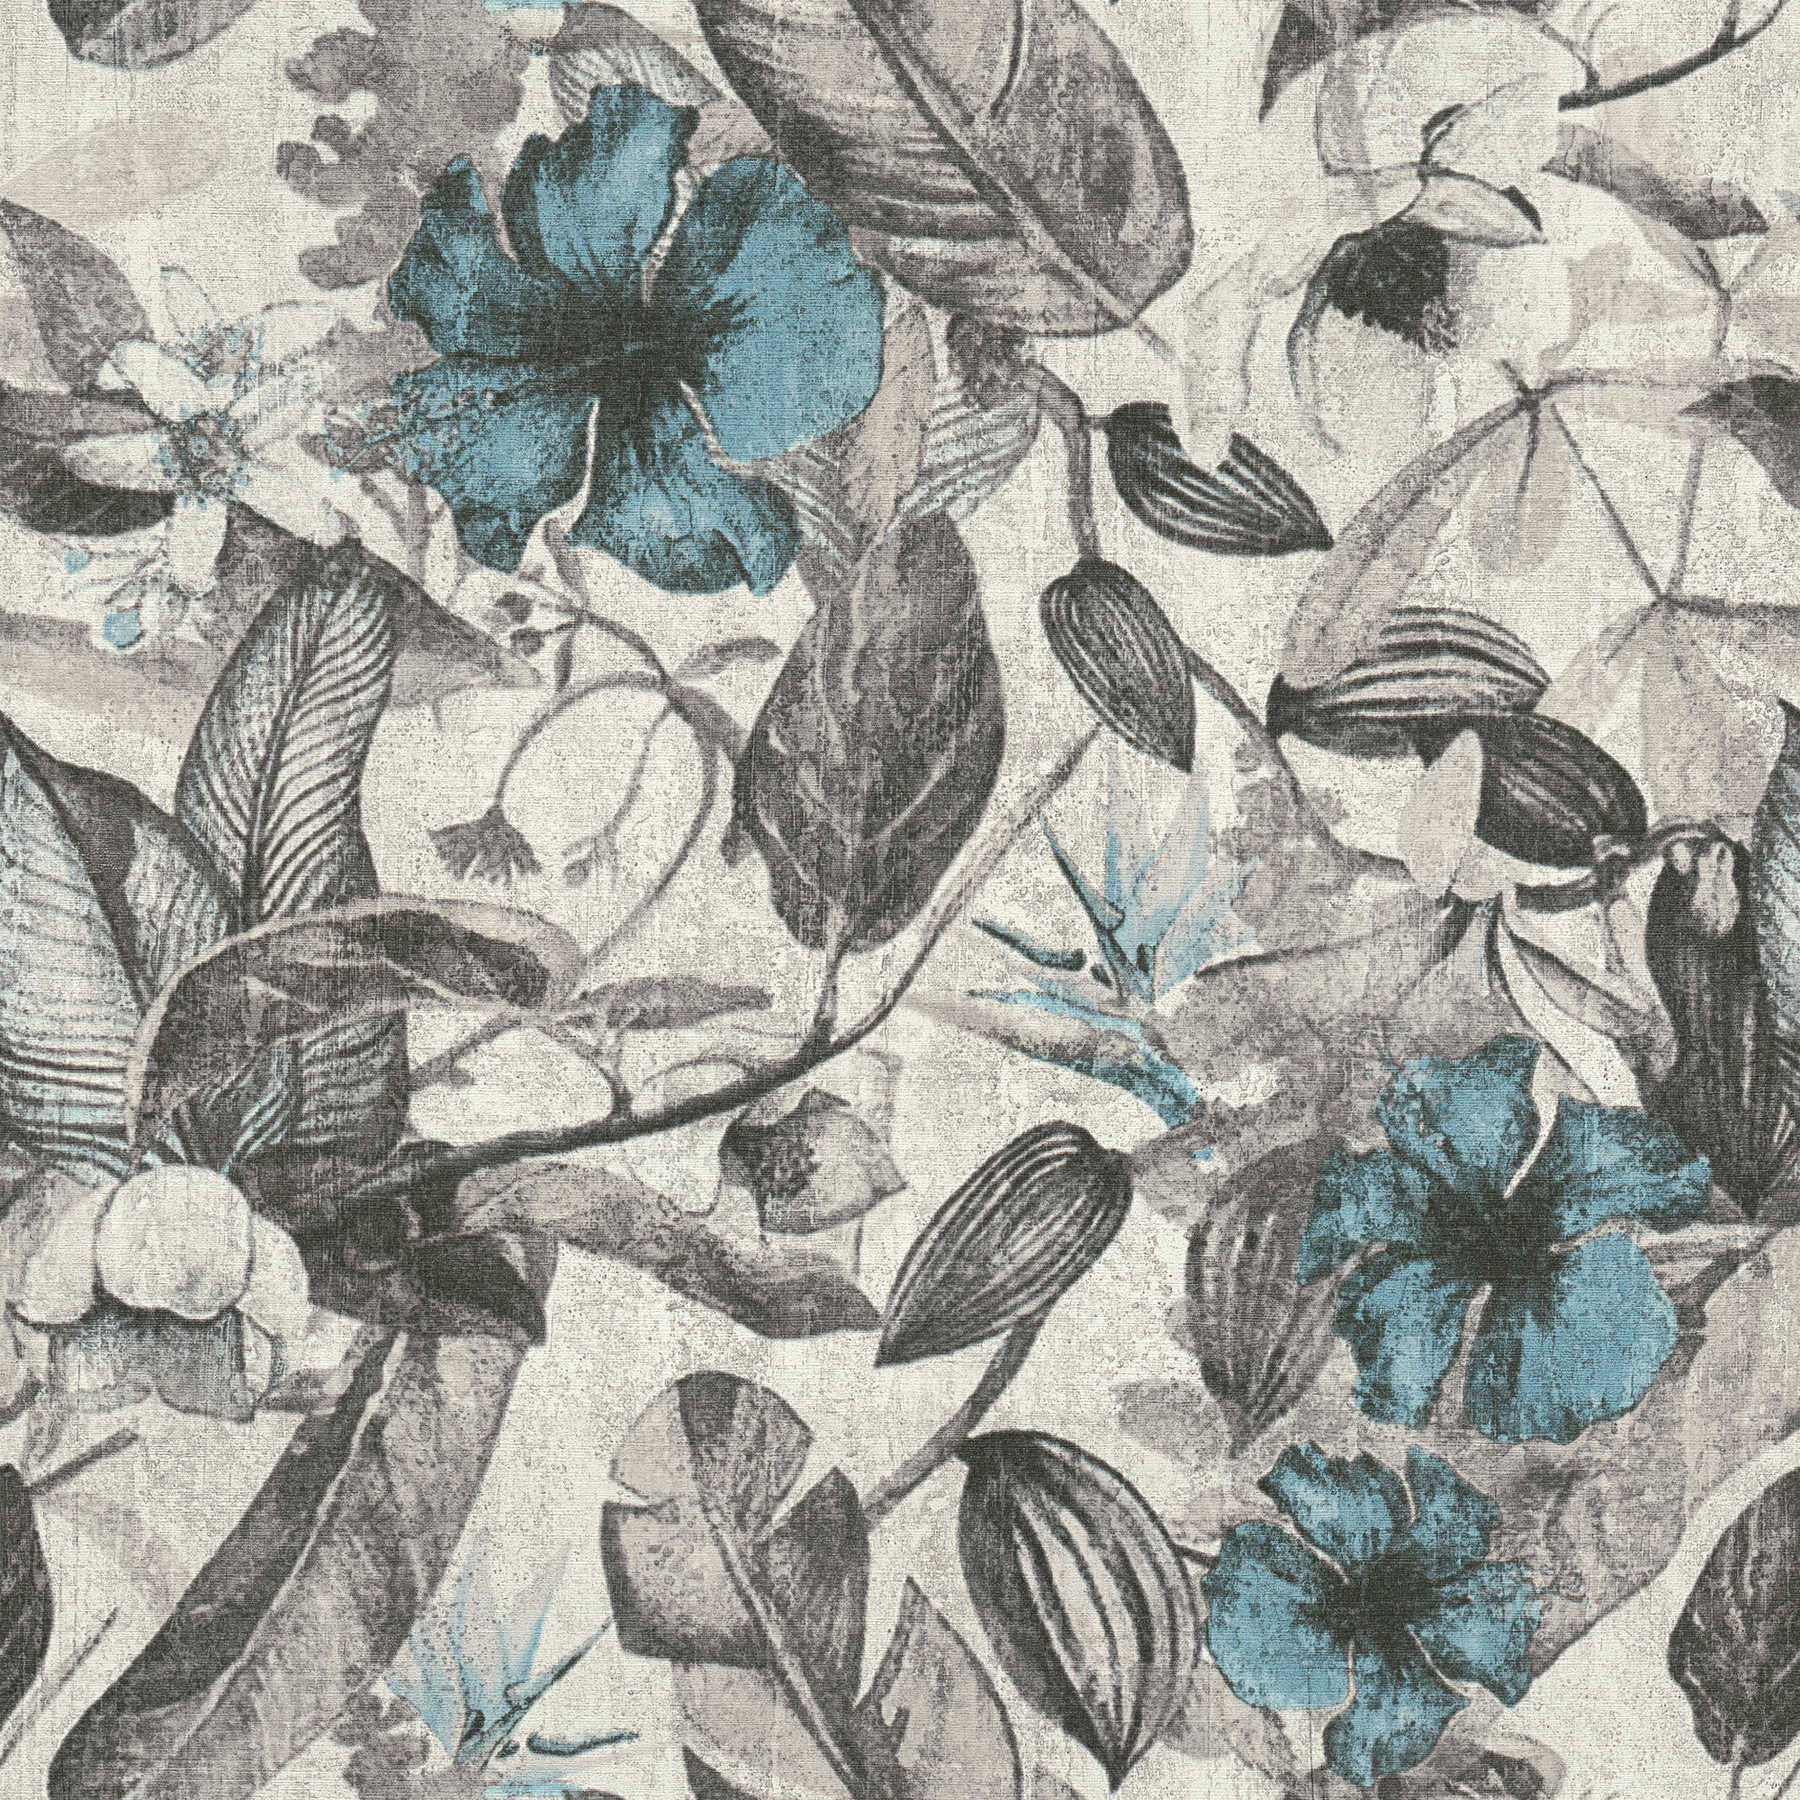 papel pintado con motivos florales tropicales de aspecto textil - azul, gris, negro
